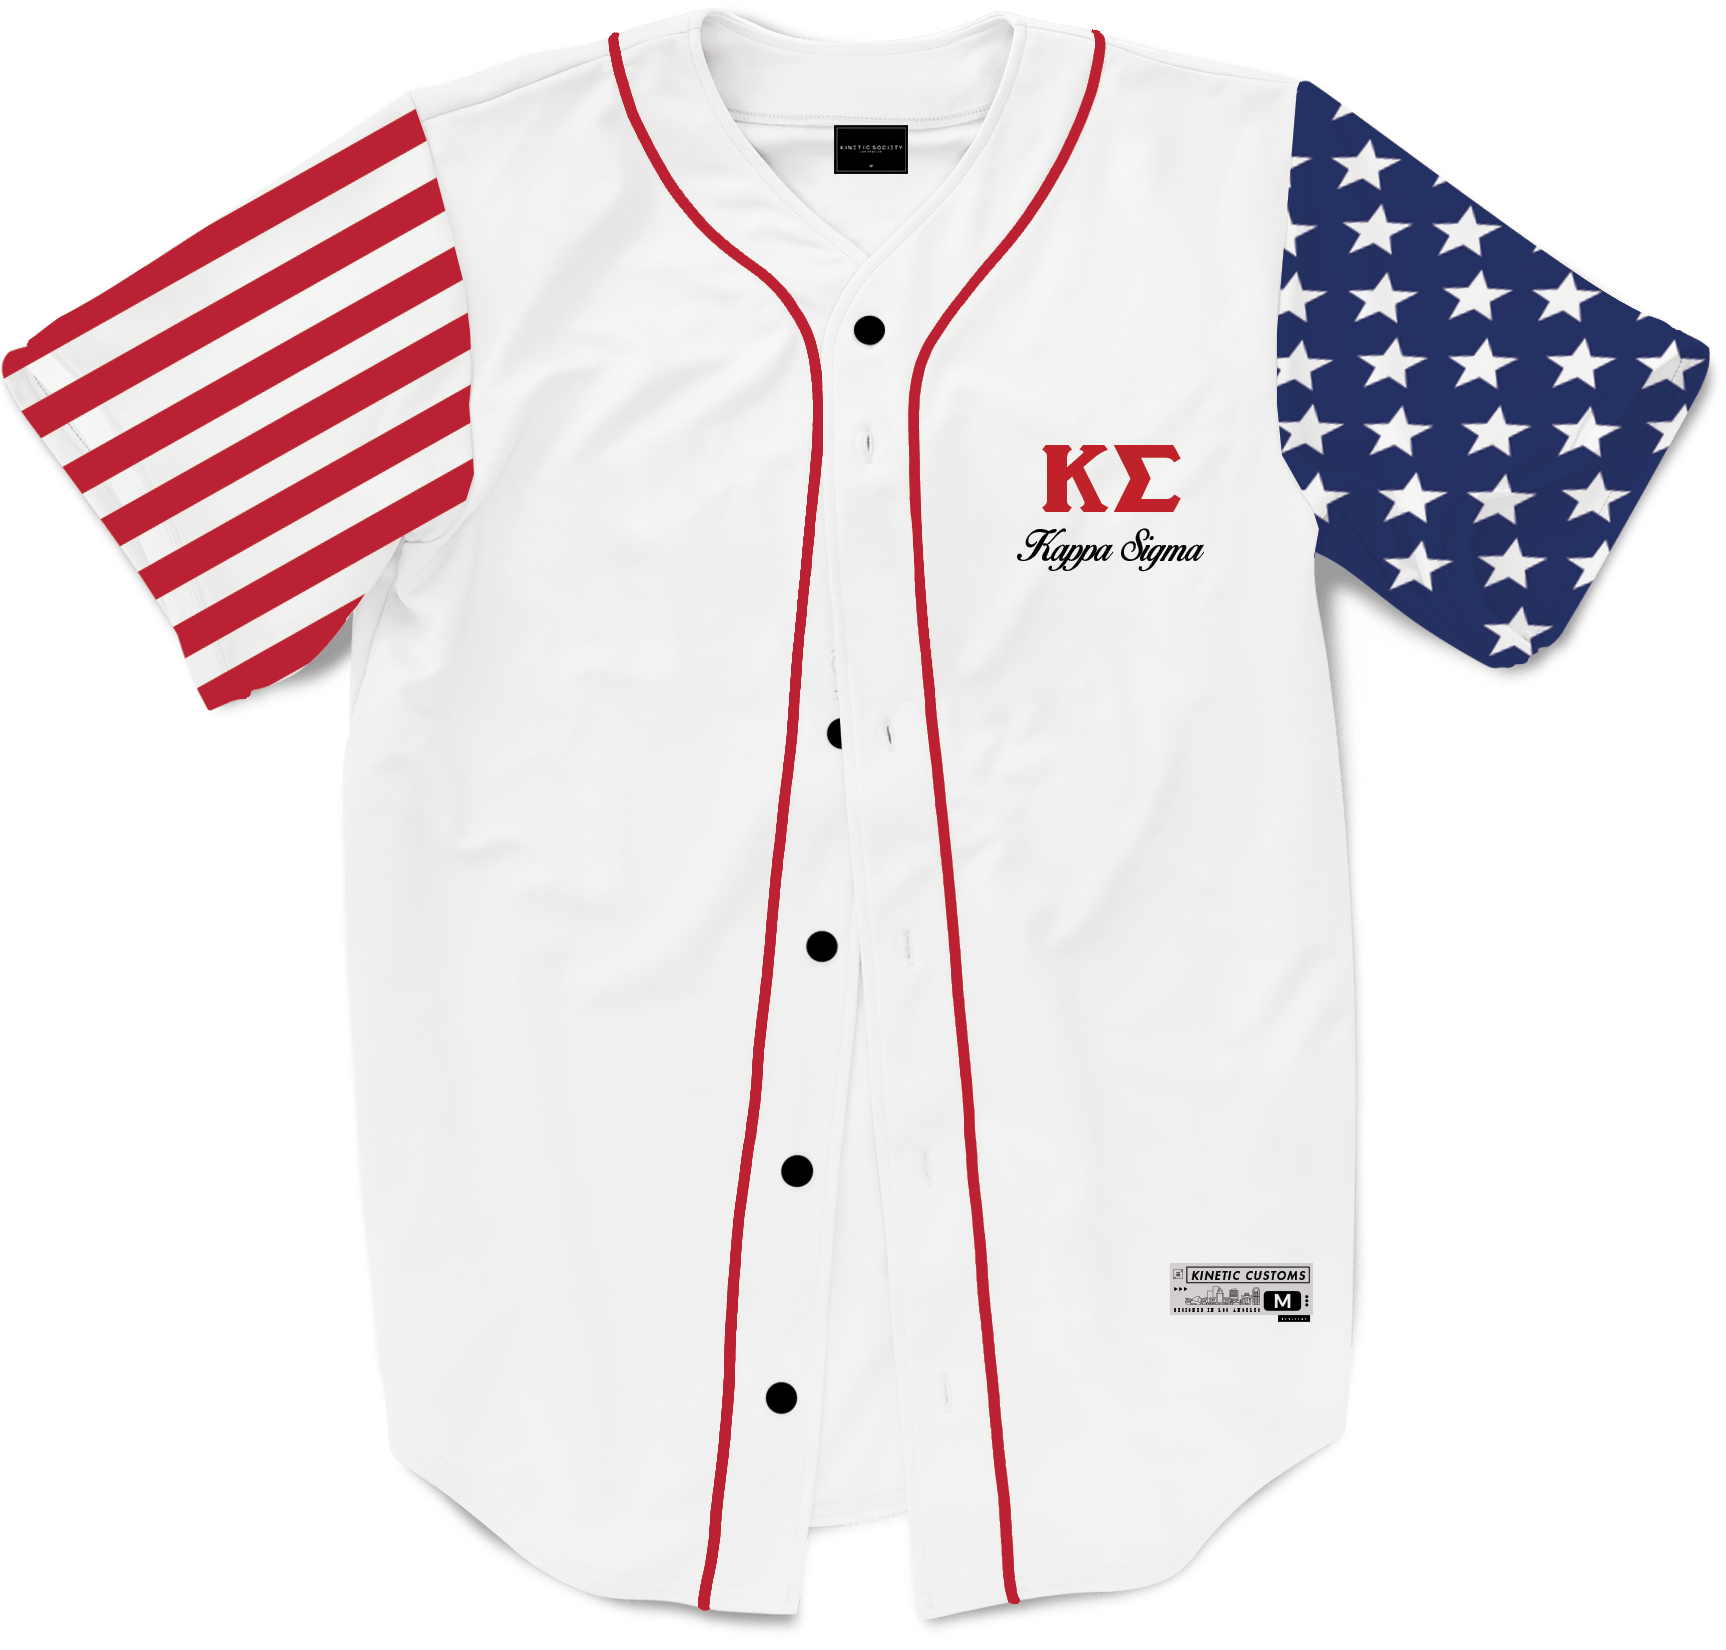 Kappa Sigma - Flagship Baseball Jersey - Kinetic Society